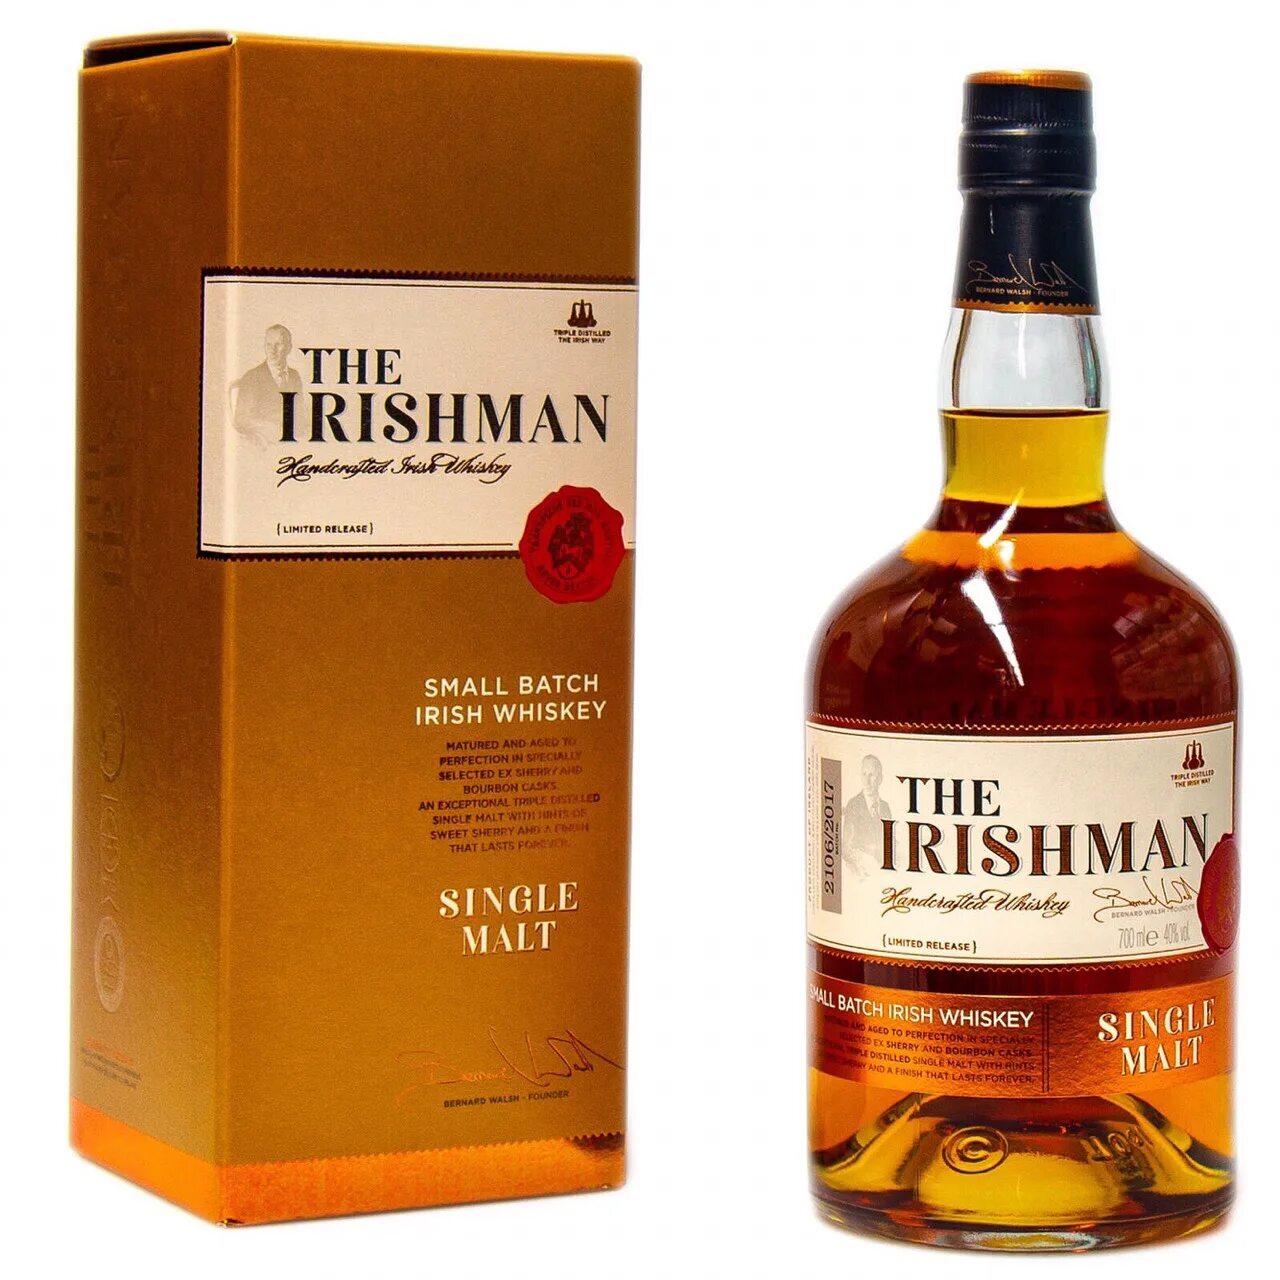 Виски the Irishman Single Malt. Виски Айришмен сингл Молт. Виски ирландский зе Айришмен сингл Молт. Single Malt виски Irish Whiskey.